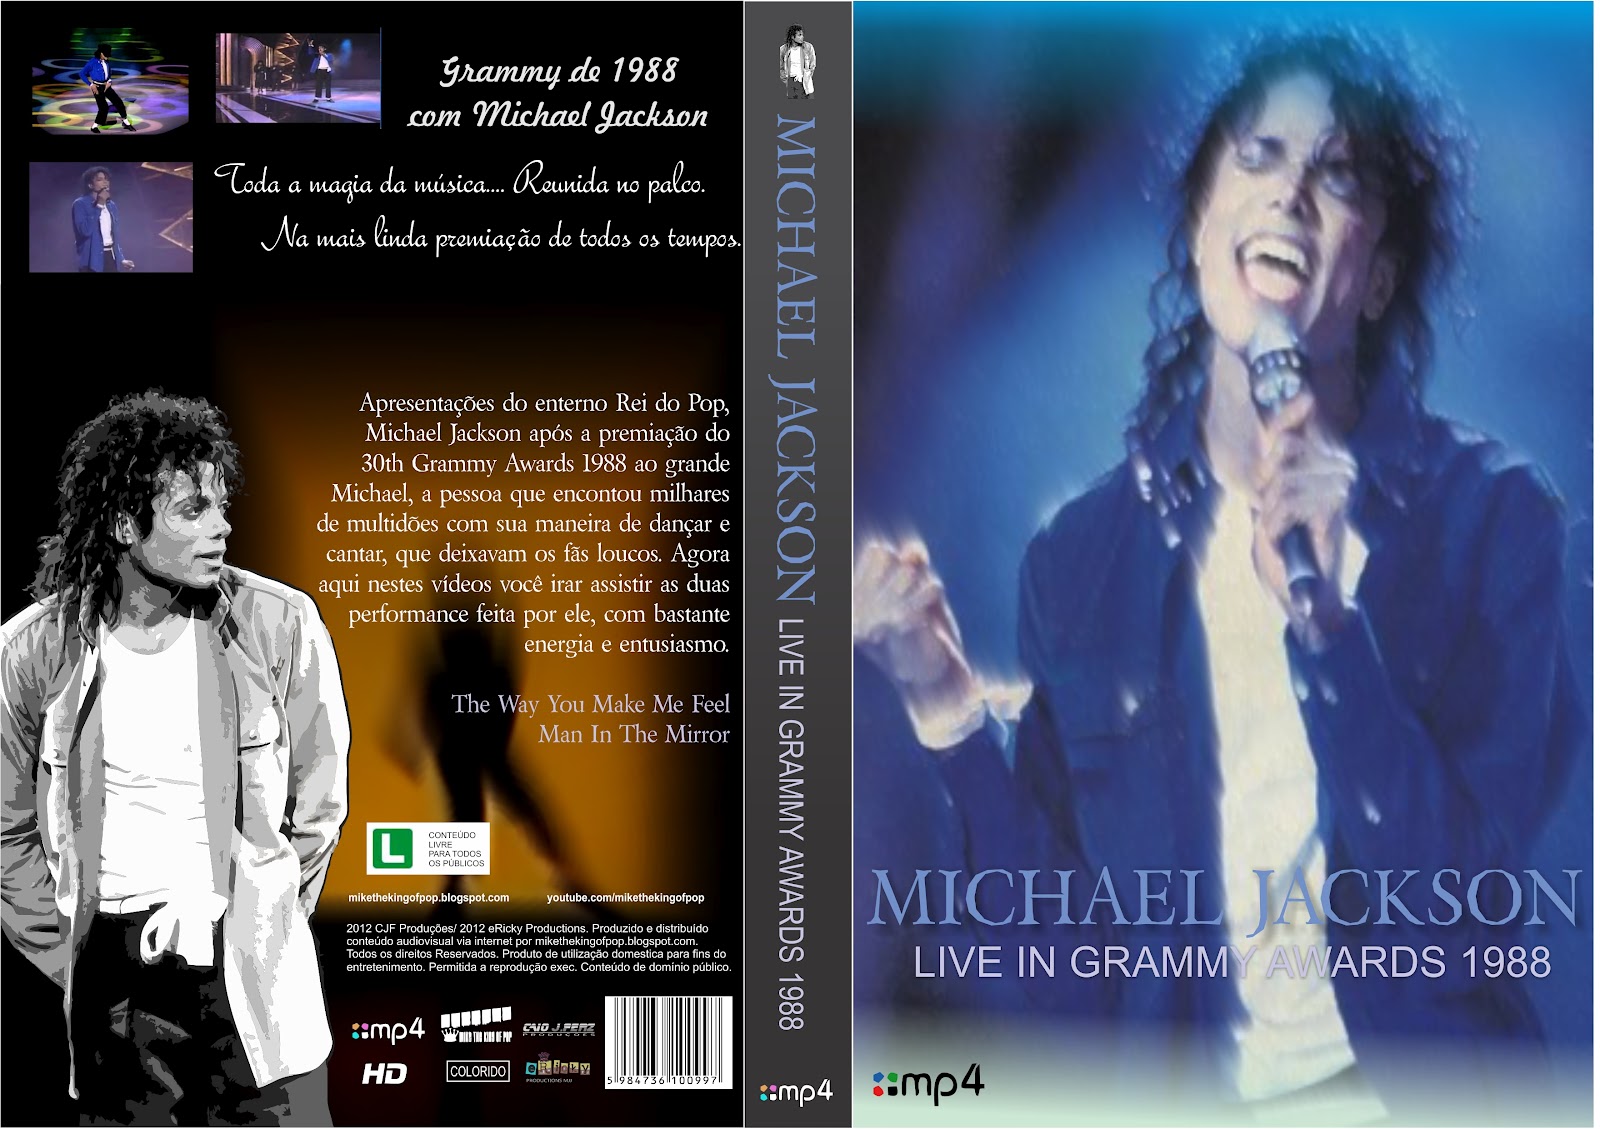 http://2.bp.blogspot.com/-LE494b7IZDQ/T4SwVFSM4DI/AAAAAAAAADk/pPWge5AigBo/s1600/Capa+-+Michael+Jackson+Live+In+Grammy+Awards+1988+HD.jpg